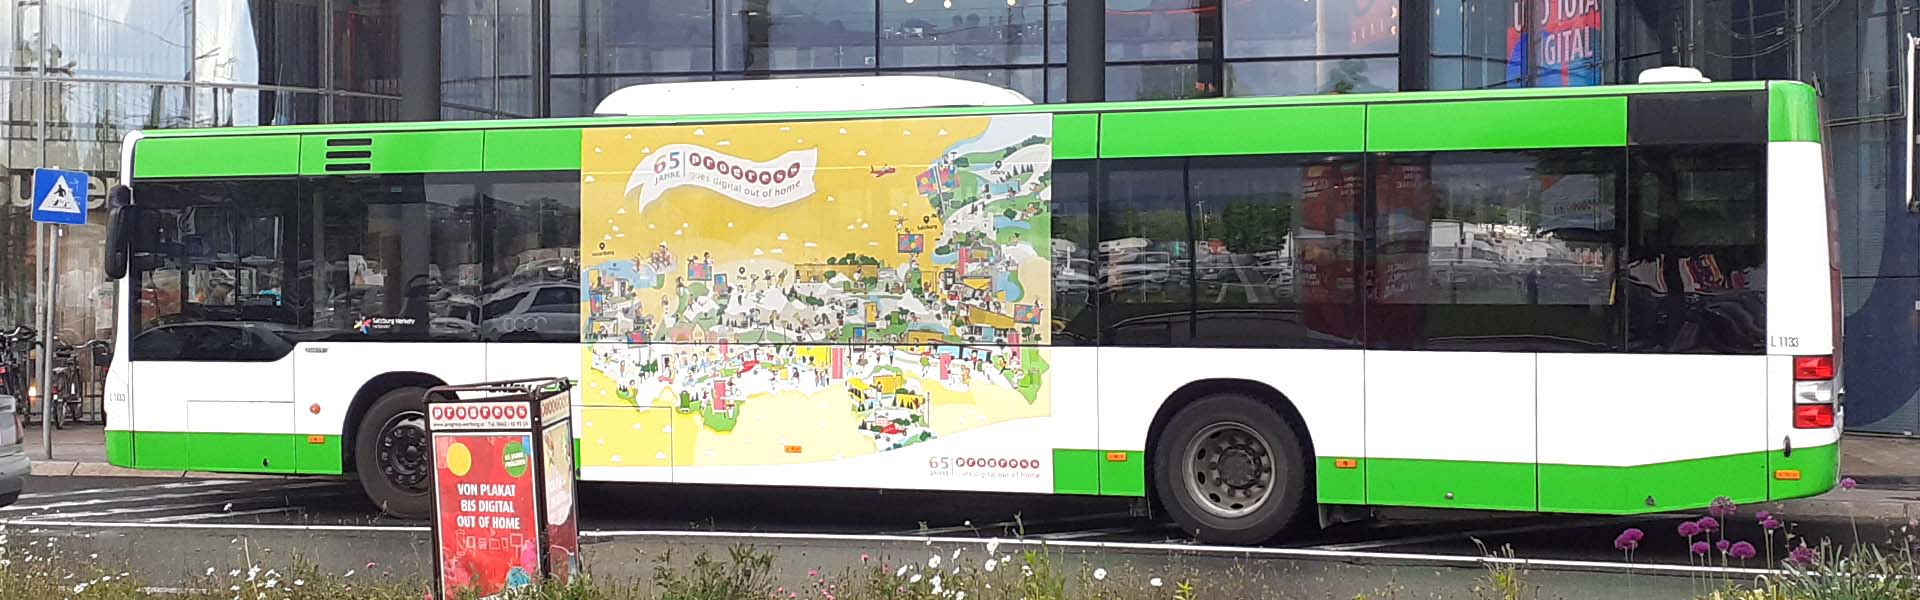 Progress Wimmelbild Bus Werbung